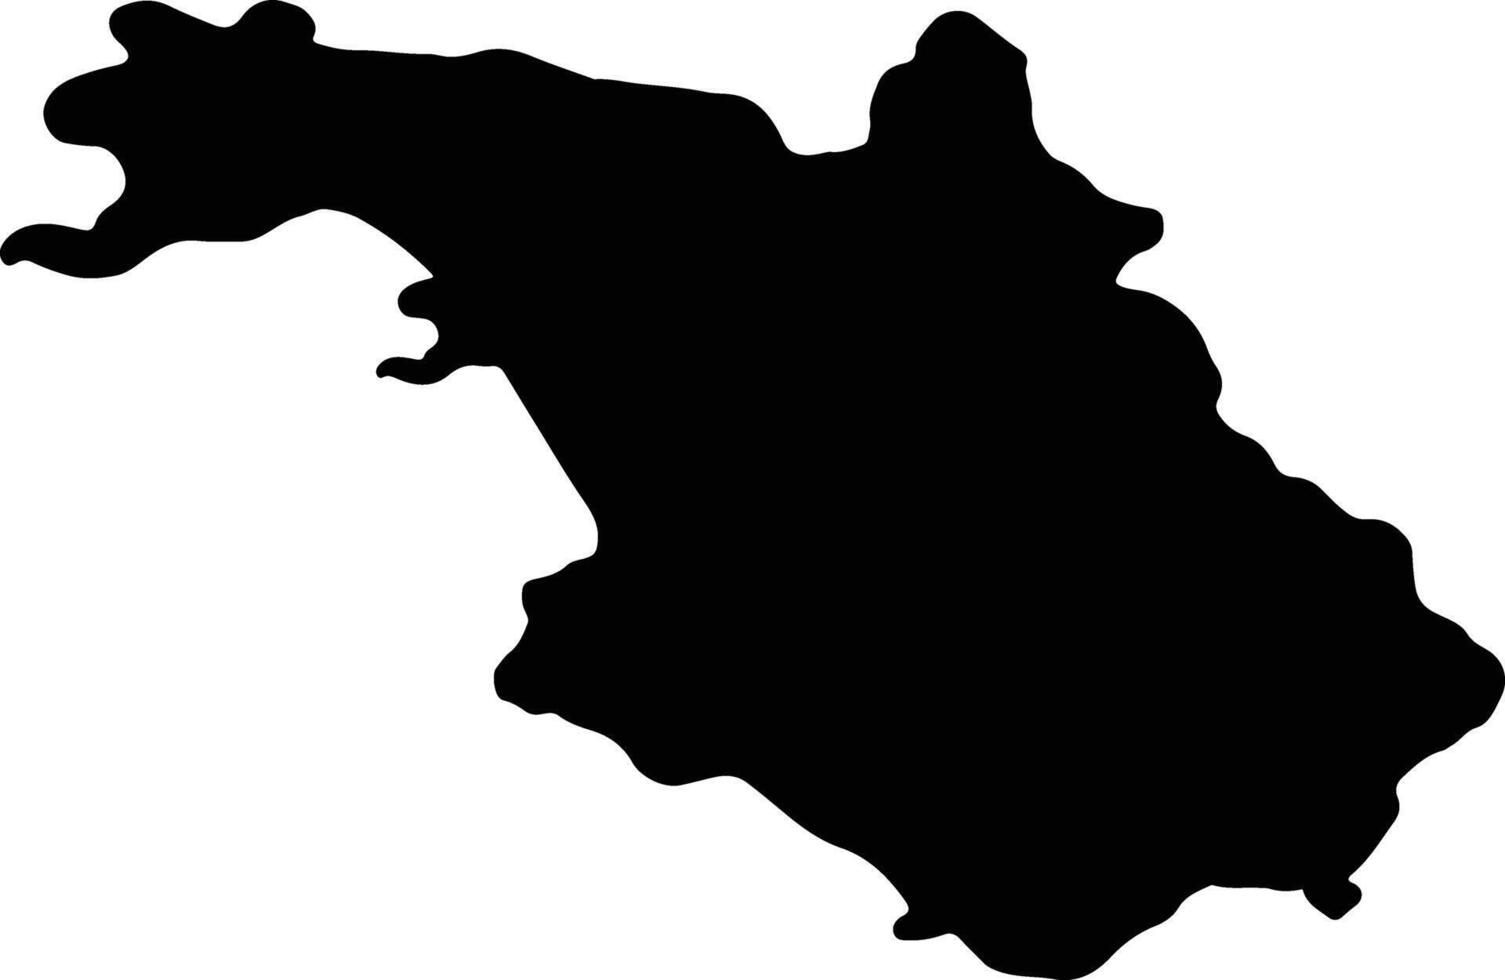 Salerne Italie silhouette carte vecteur